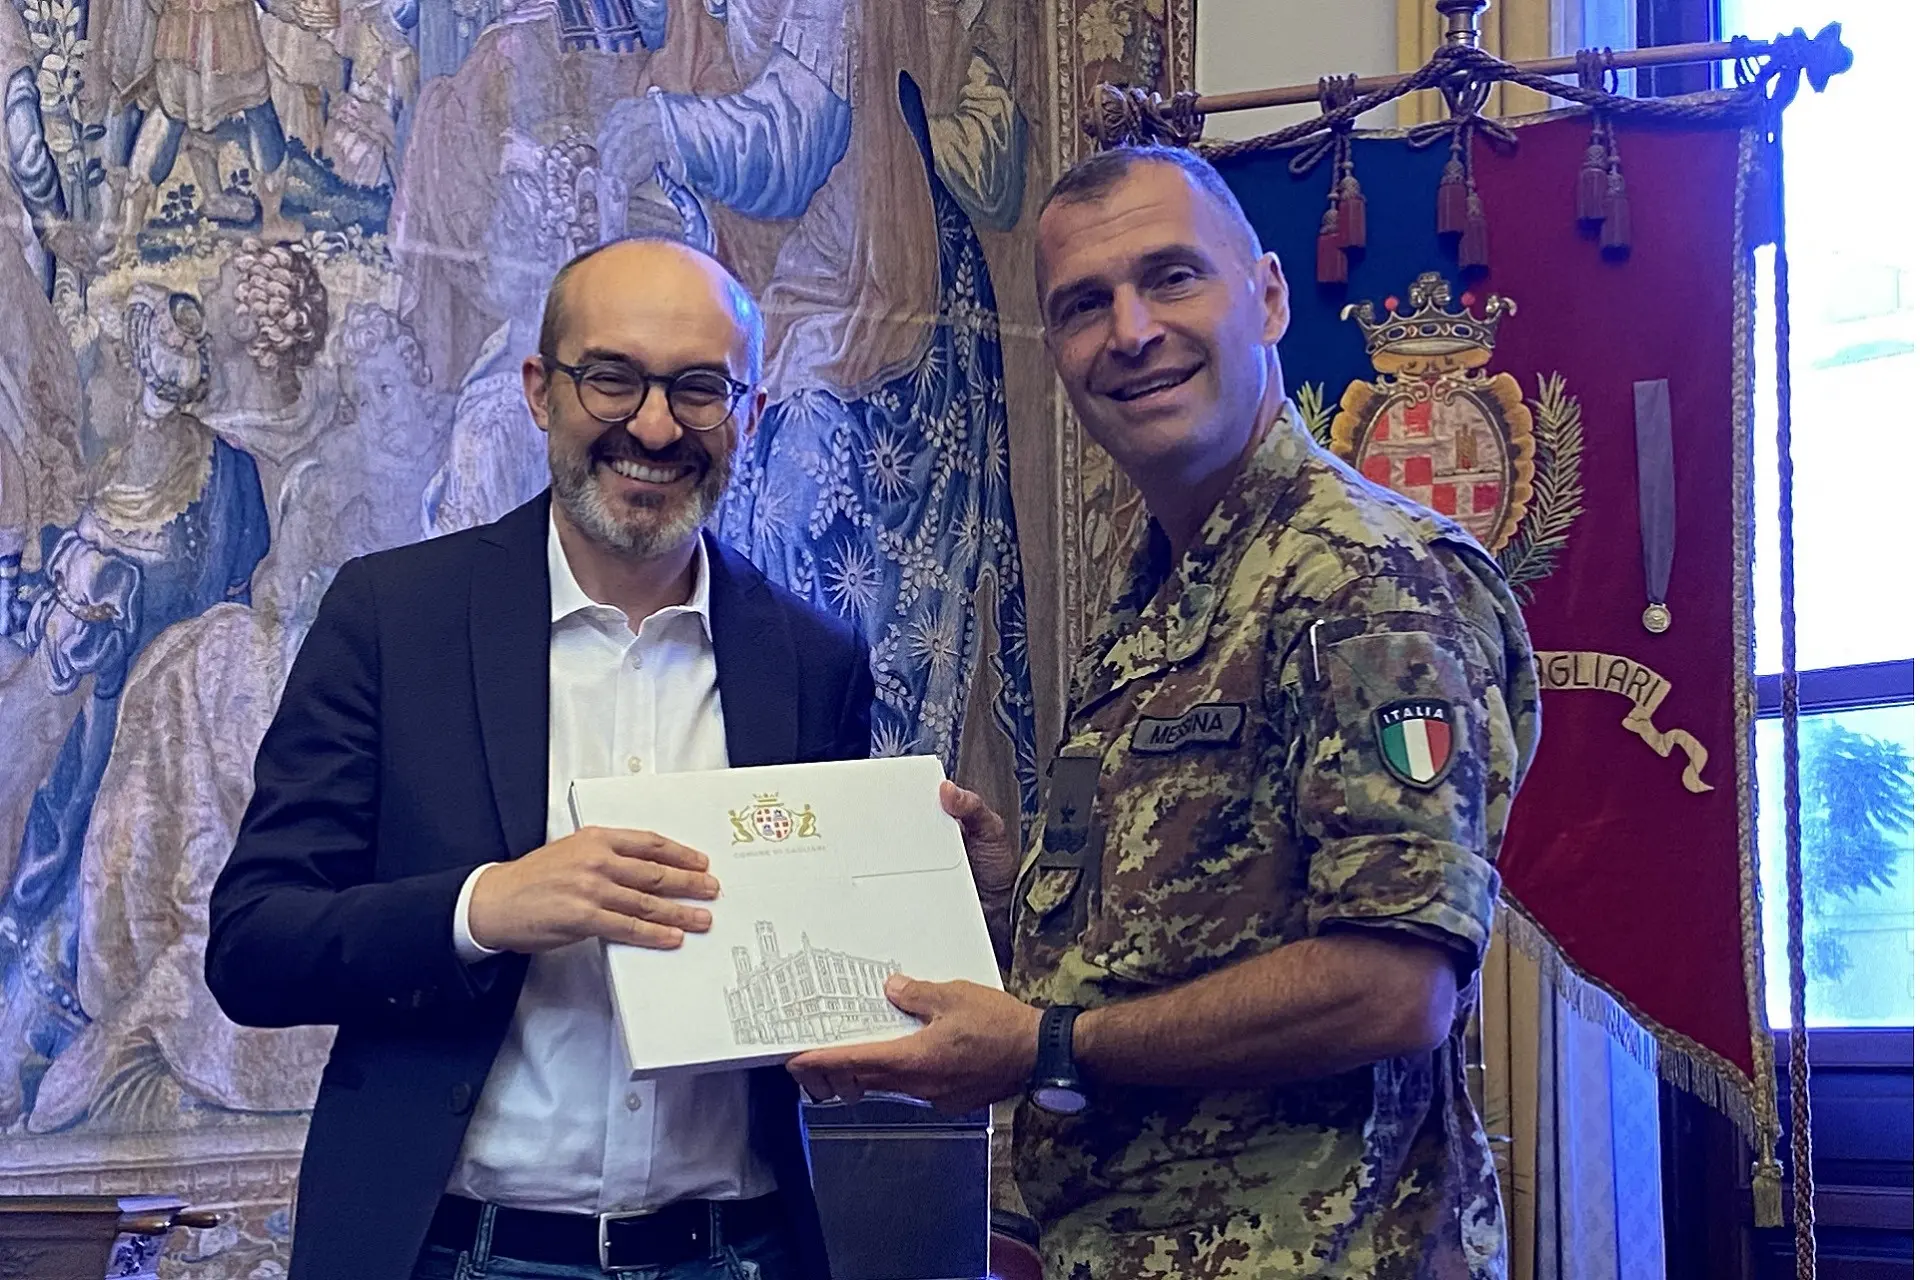 Mayor Truzzu with General Messina (Photo Municipality of Cagliari)